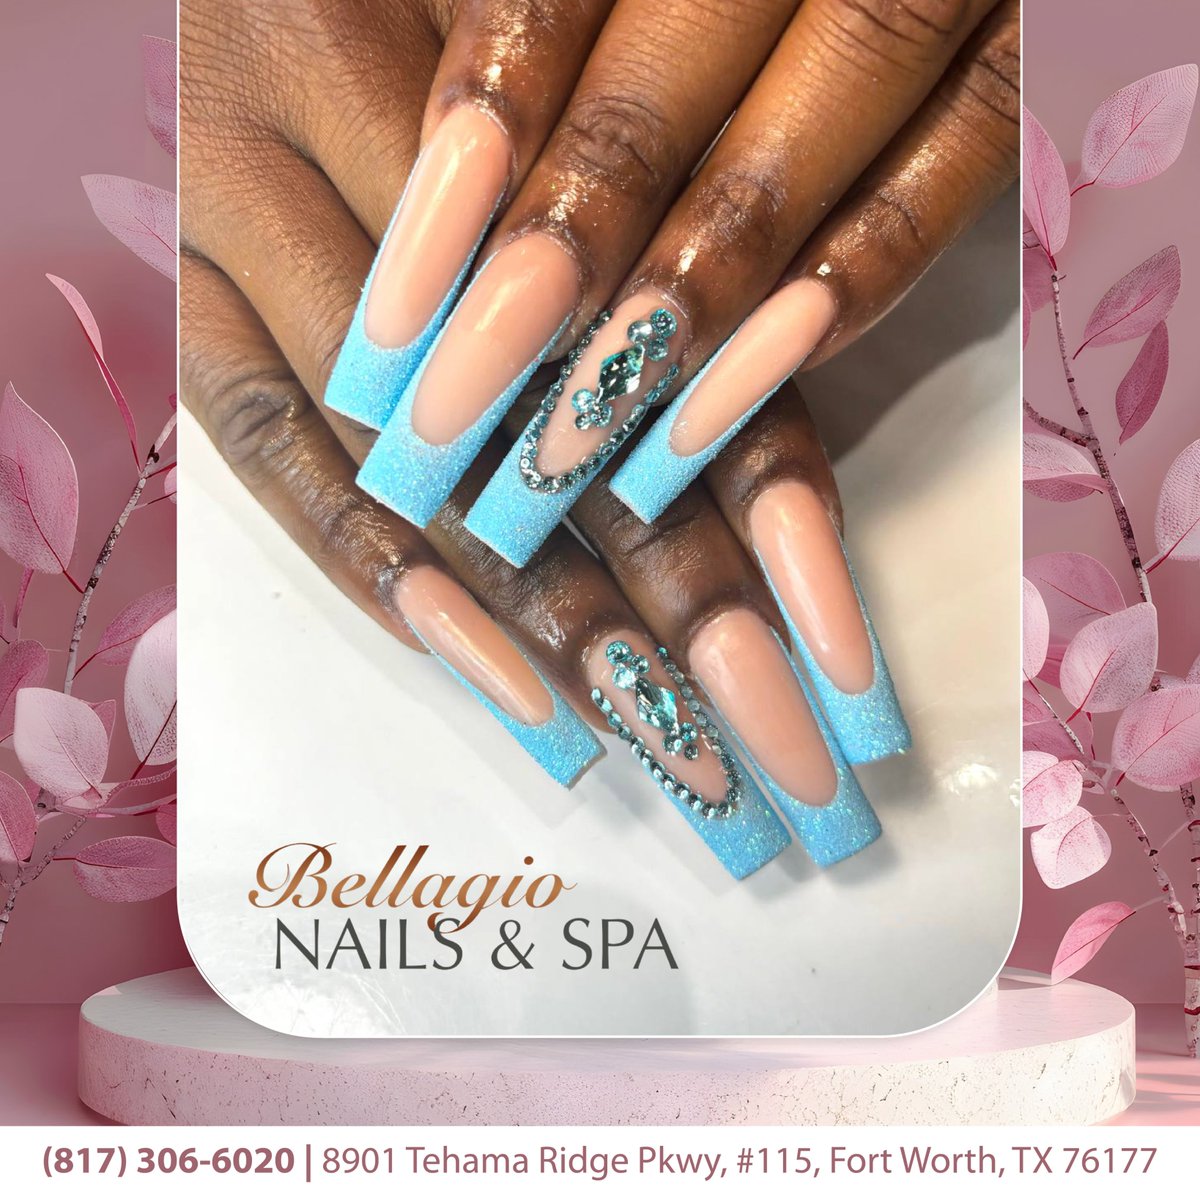 Blue nails are always a good idea, especially when they sparkle! 💙✨
#bellagionailspa #bellagiotx #bellagionails #bellagiofortworth #nailsalonfortworth #nailsalontx #nail #nailsoftheday #longnails #naildesign #nailsalonnearme #glitternails #nailsalon #instanails #naillove